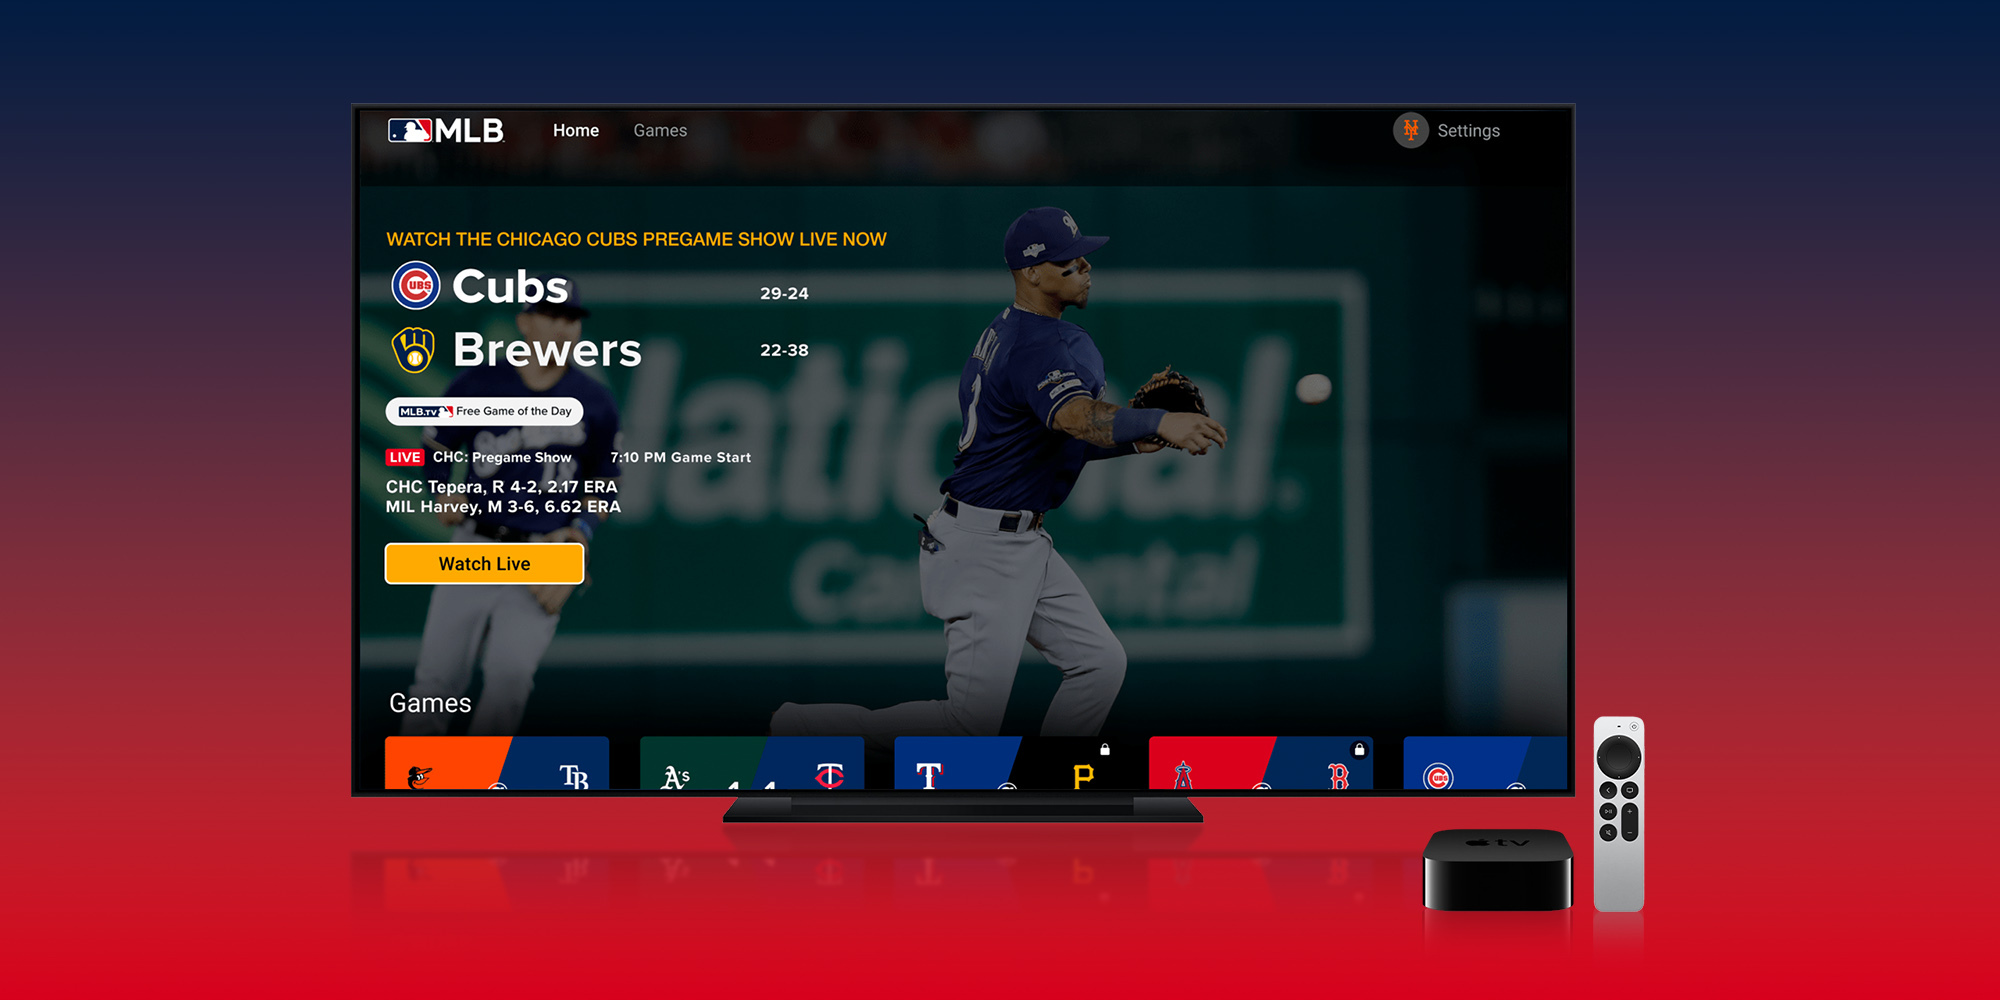 MLB Network - Watch MLB TV Coverage